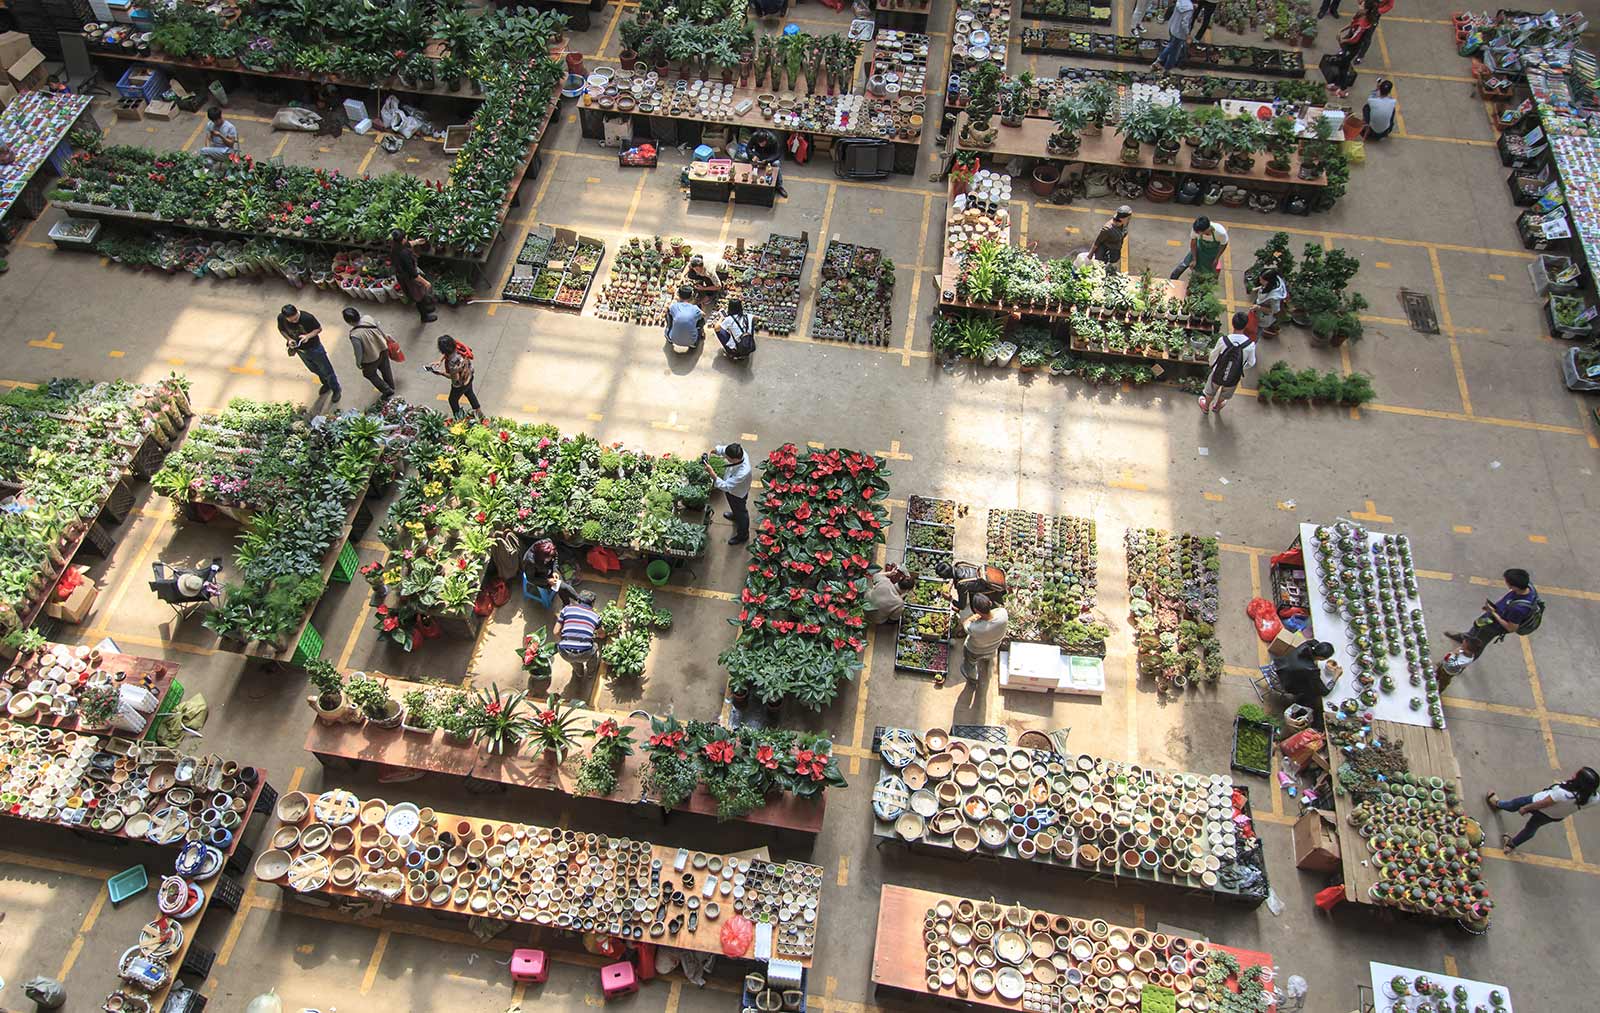 Dounan Flower Market opens daily in Kunming